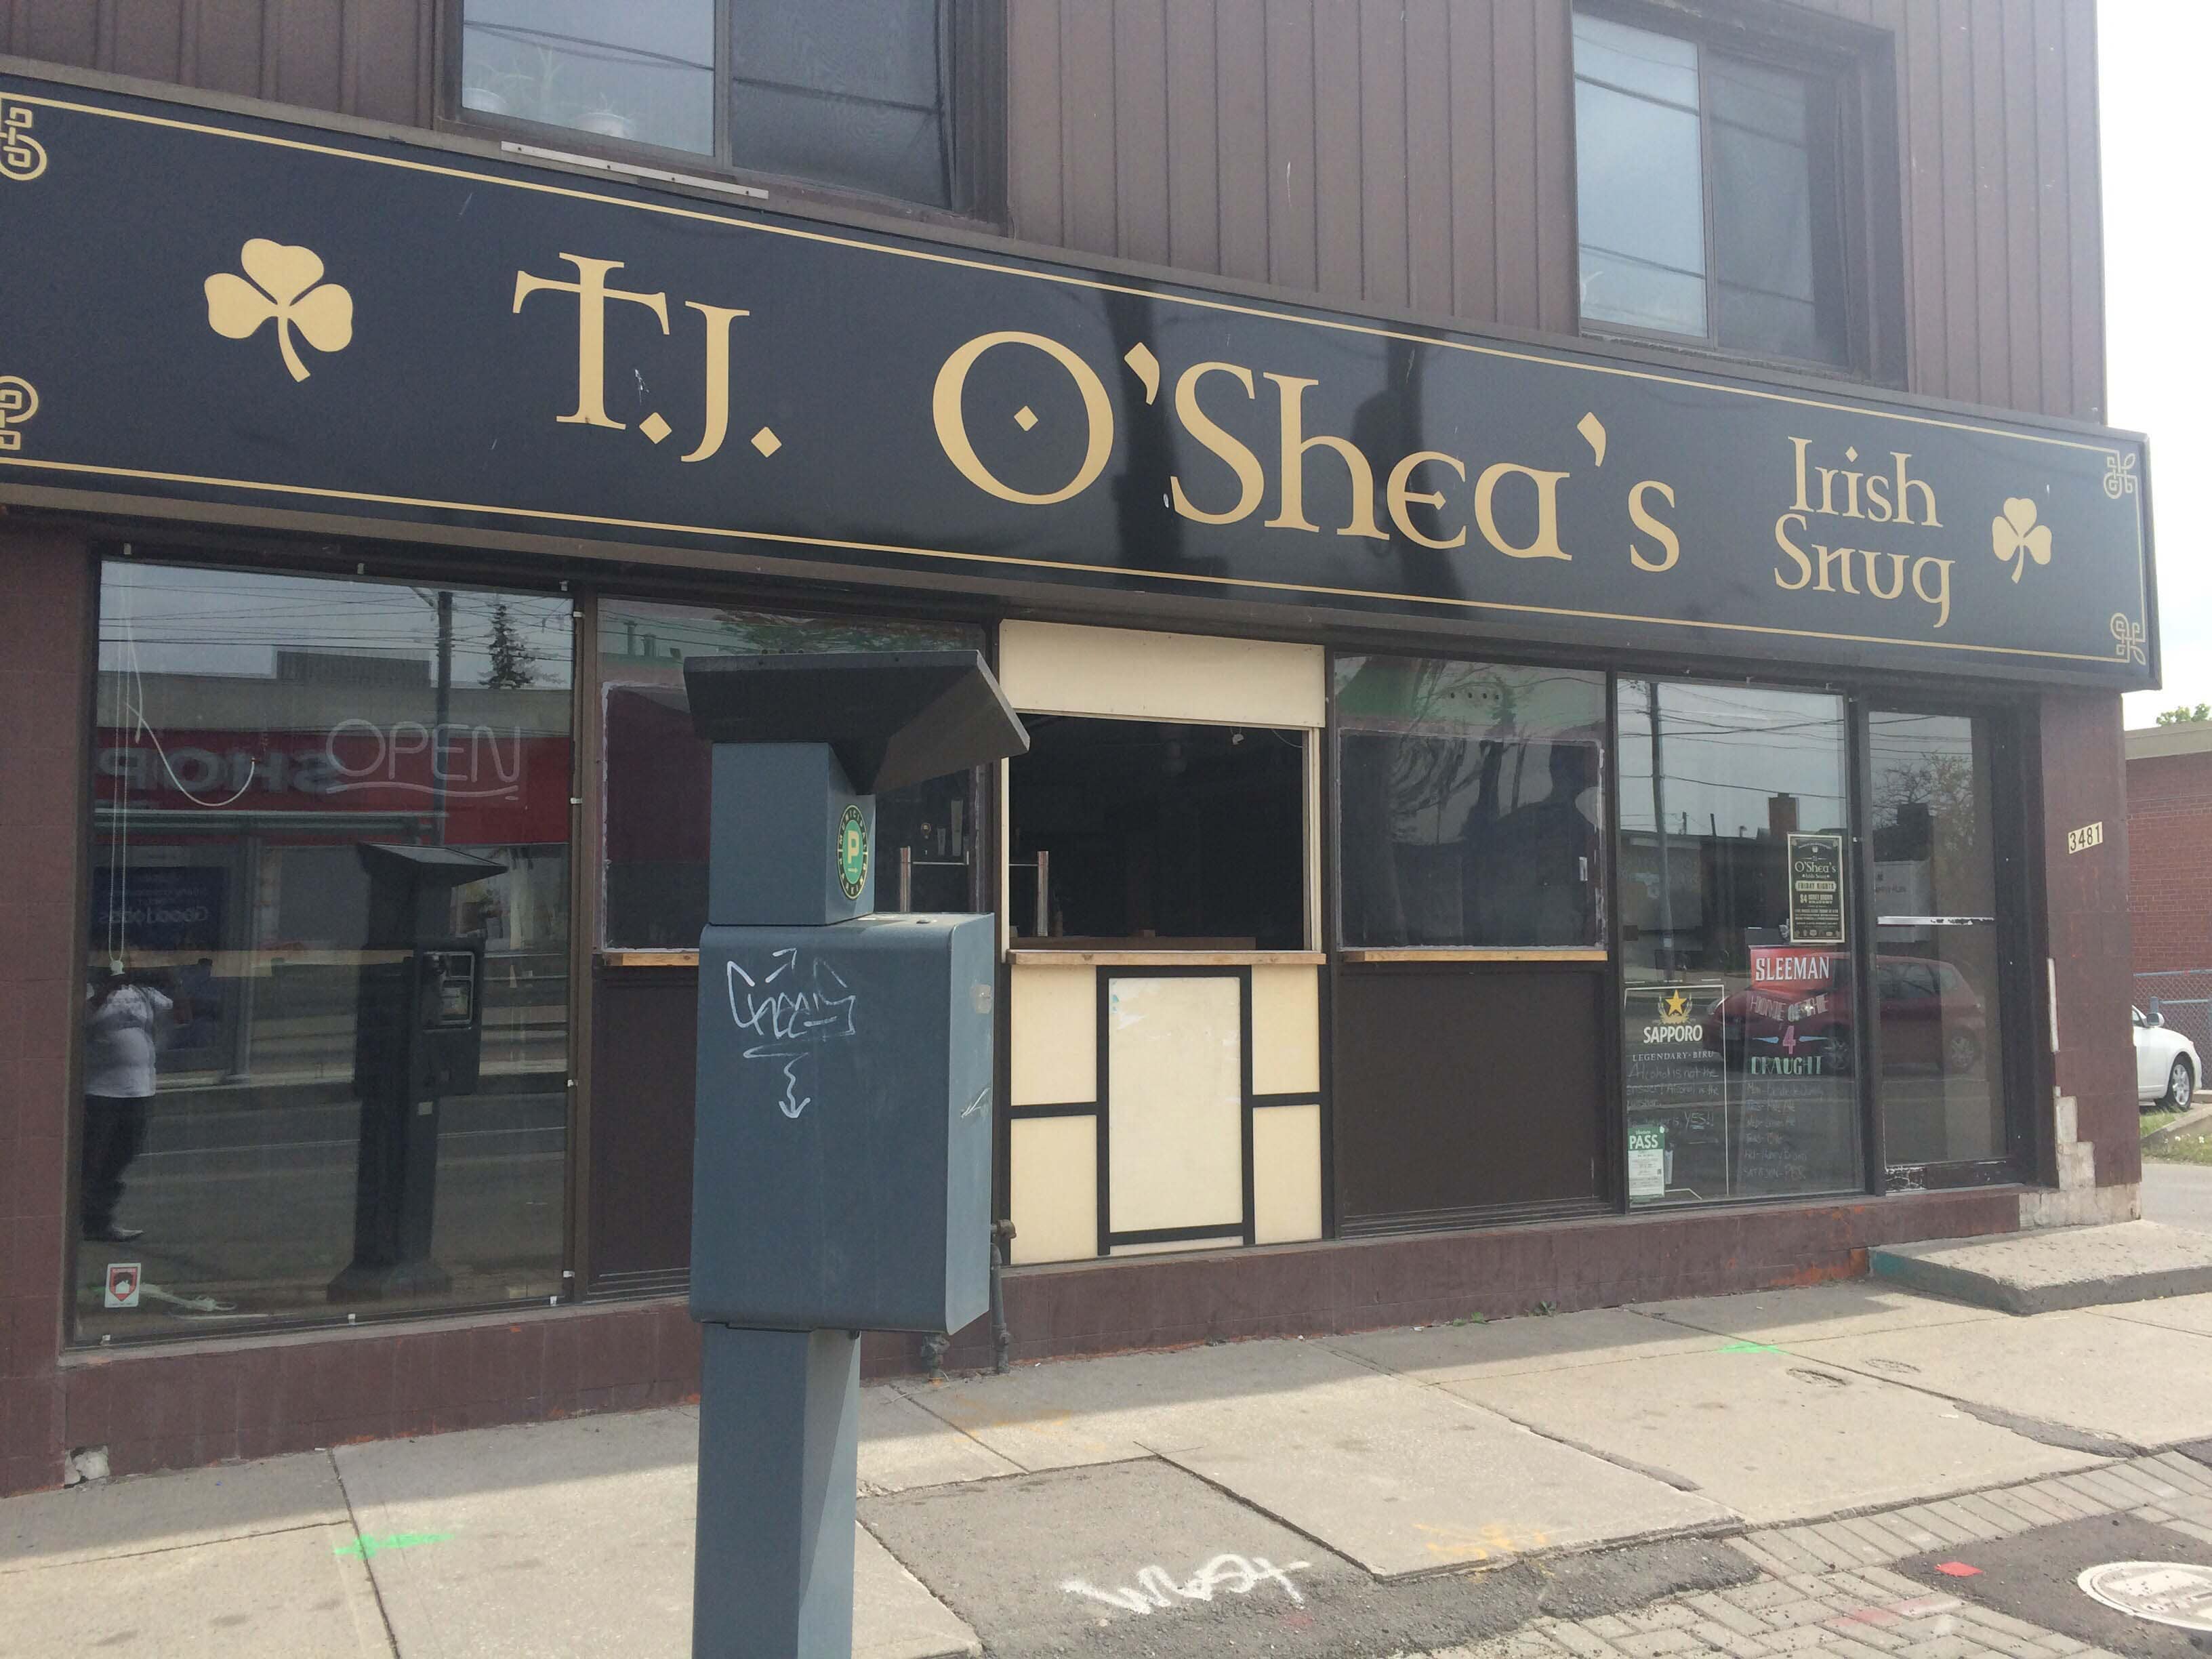 T.J. O'shea's Irish Snug